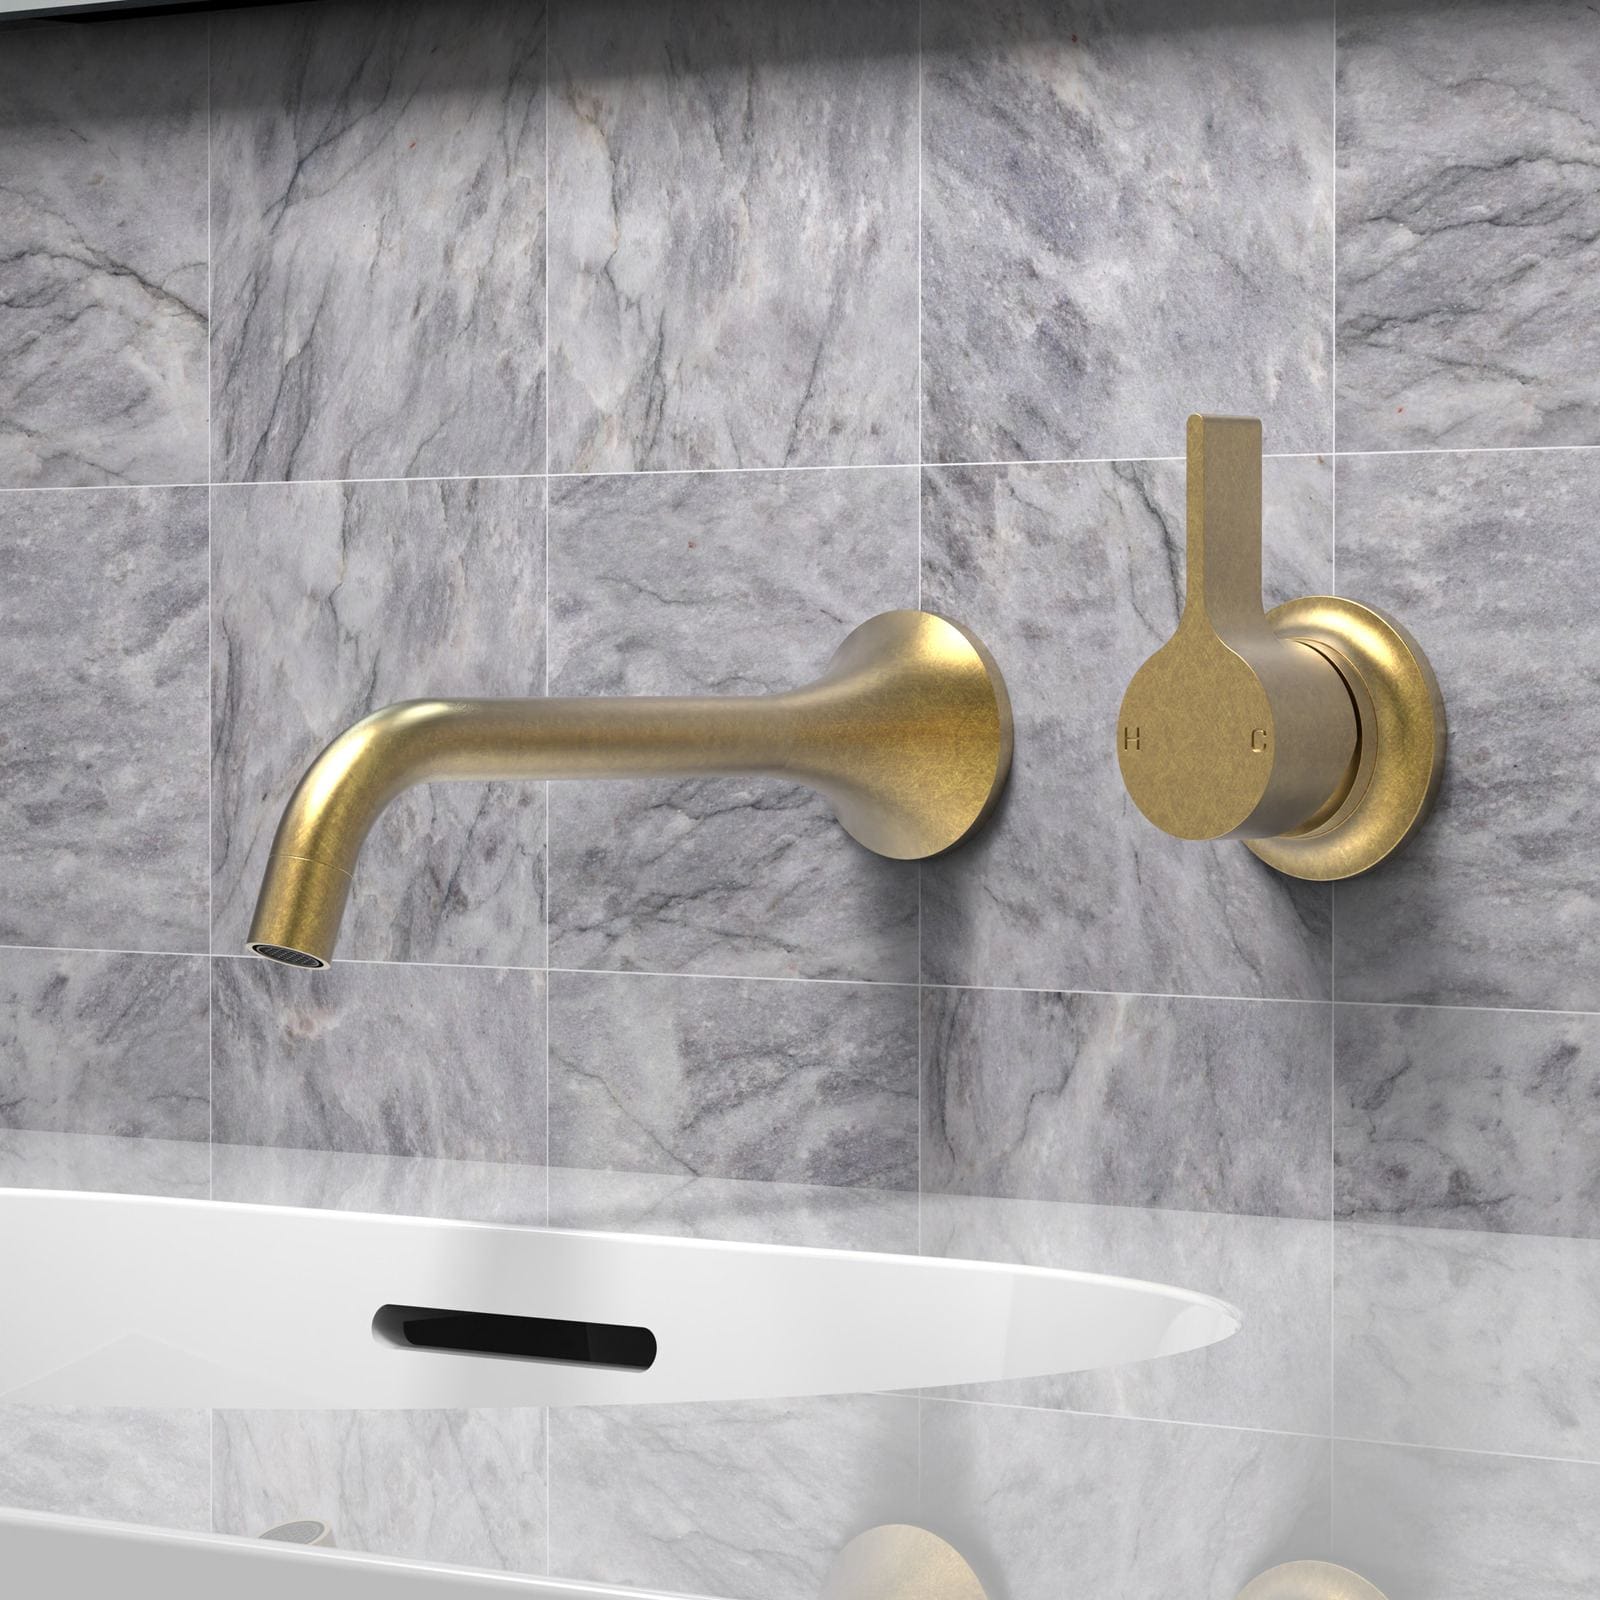 PAR TAPS. Copyright of PAR TAPS. Close up render of brushed brass sink mixer and tap on tiled wall. 